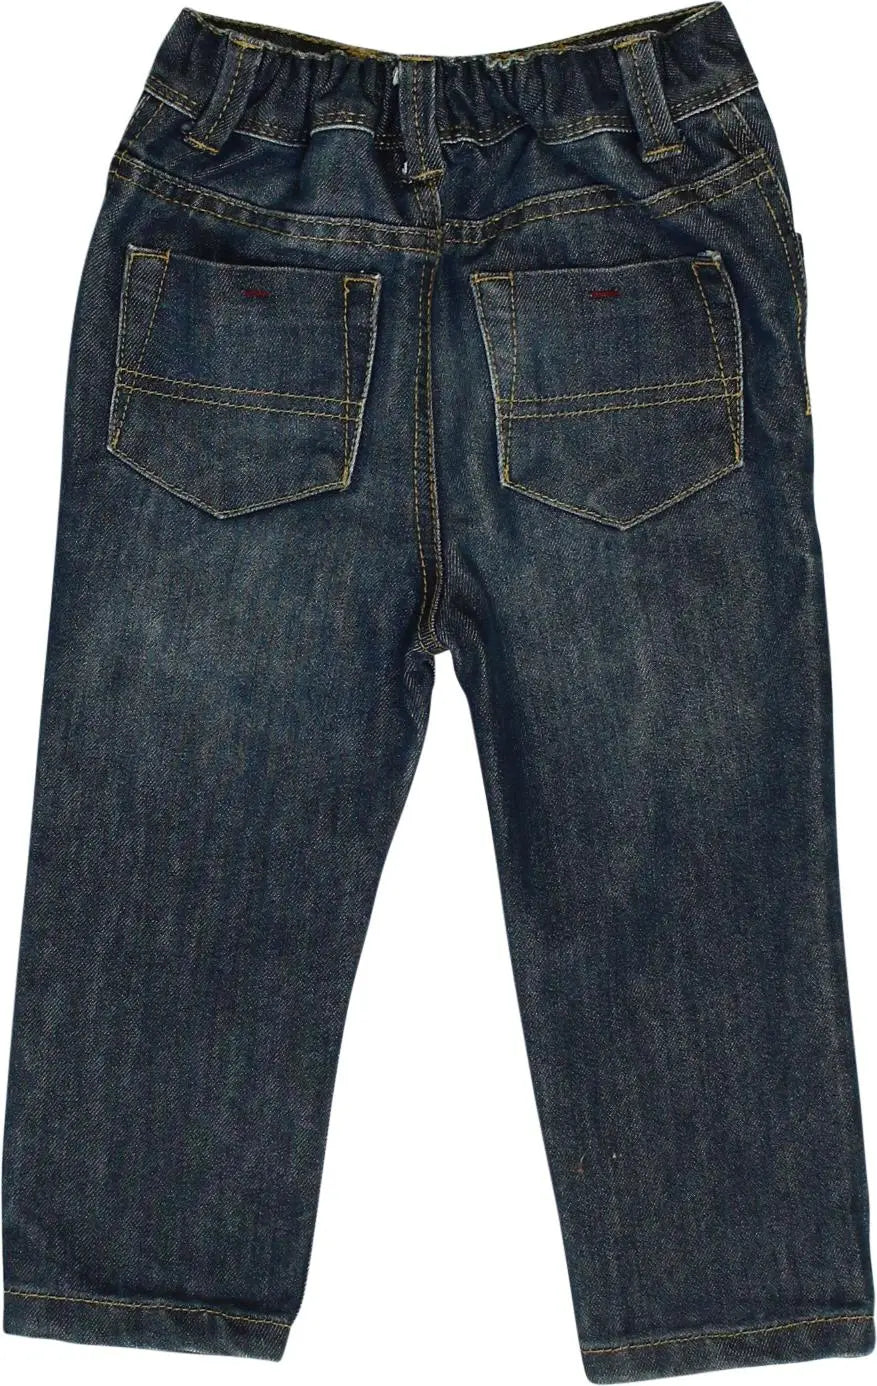 Denim Co - Blue Jeans- ThriftTale.com - Vintage and second handclothing